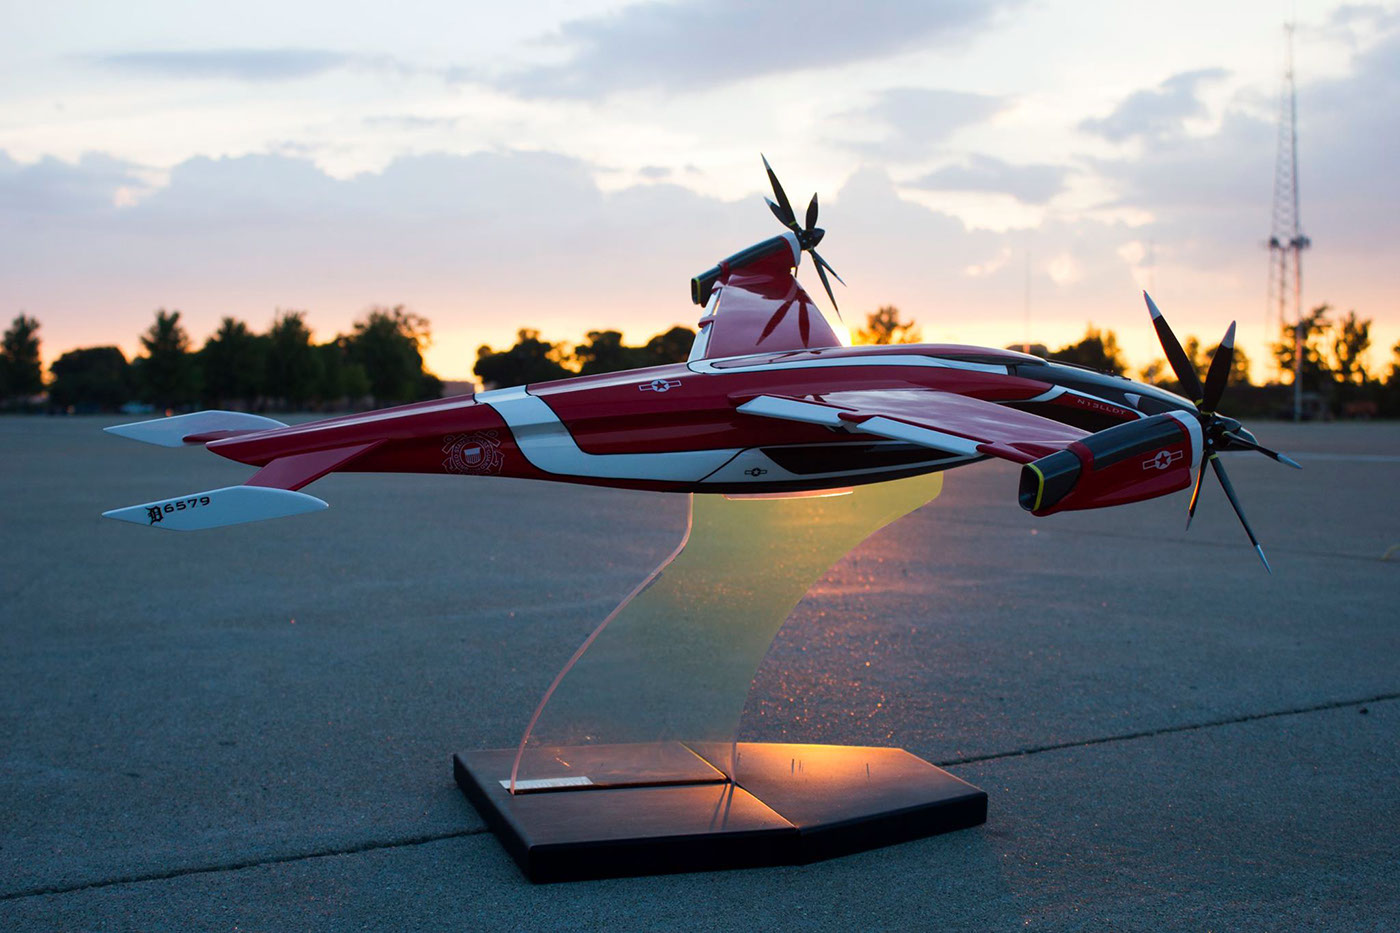 industrial design  Aircraft VTOL Model Making 3d printing Transportation Design coast guard Rapid Prototyping